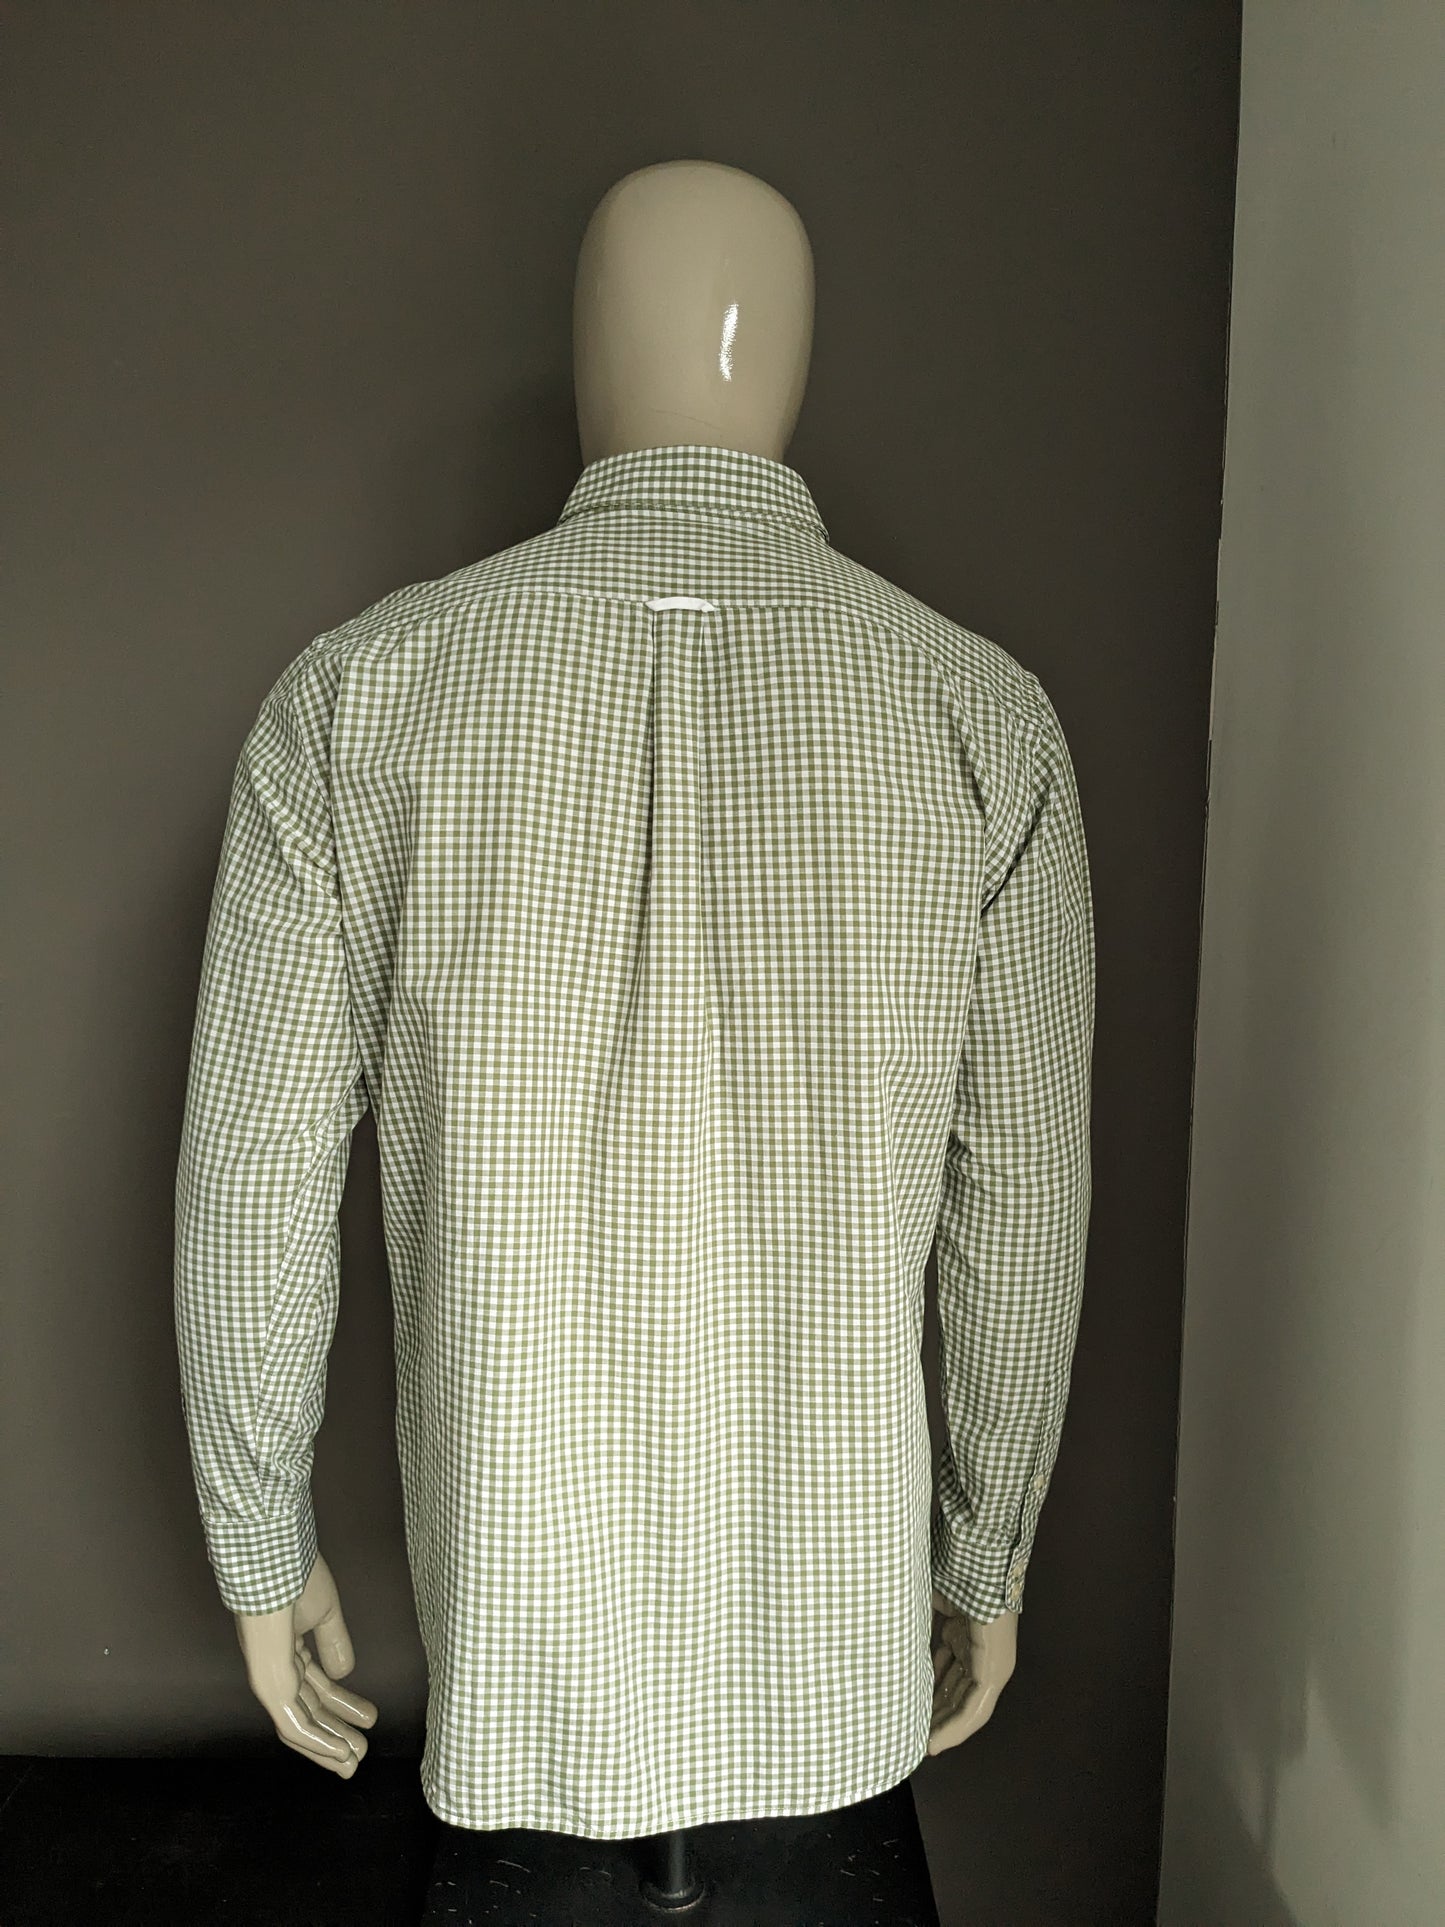 Cricket & Co shirt. Green white checkered. Size XL.